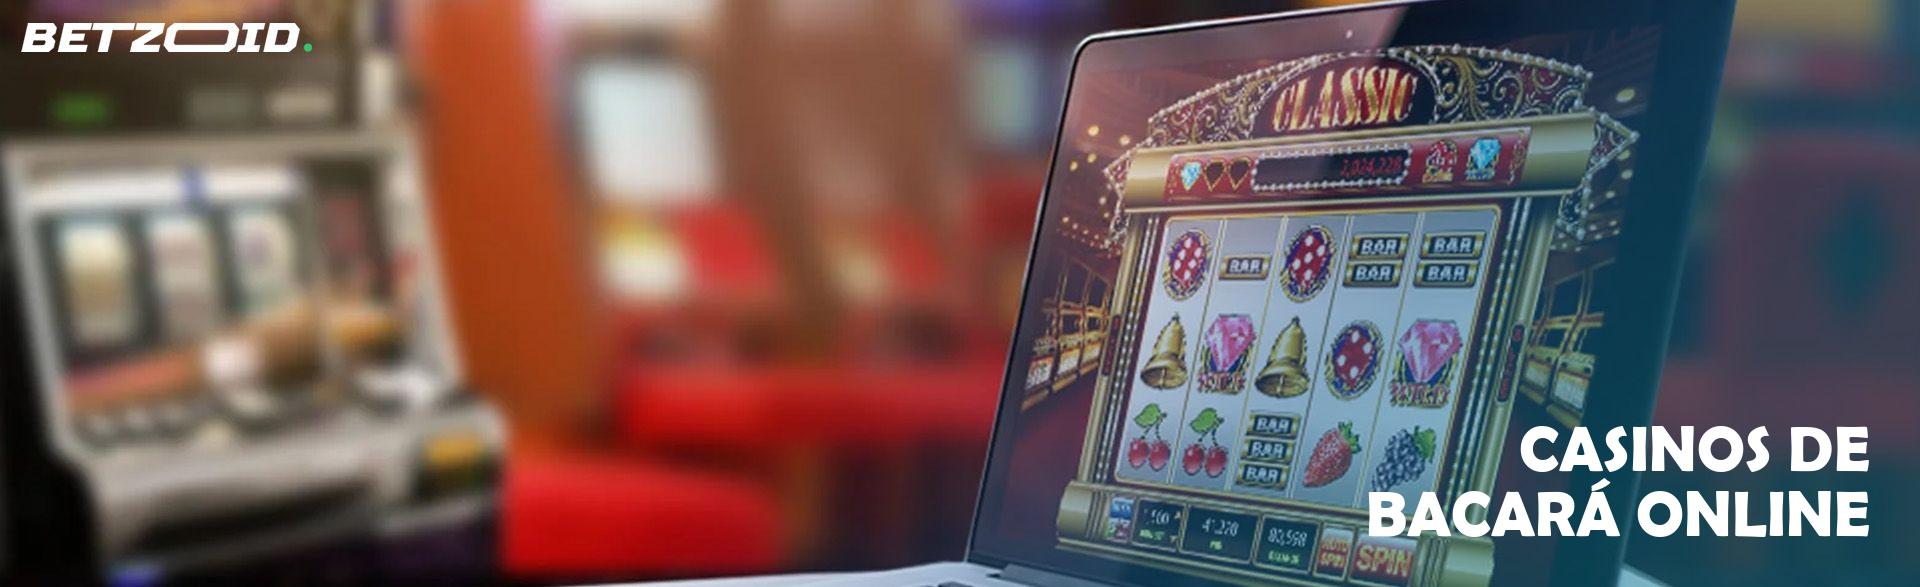 Casinos de Bacará Online.